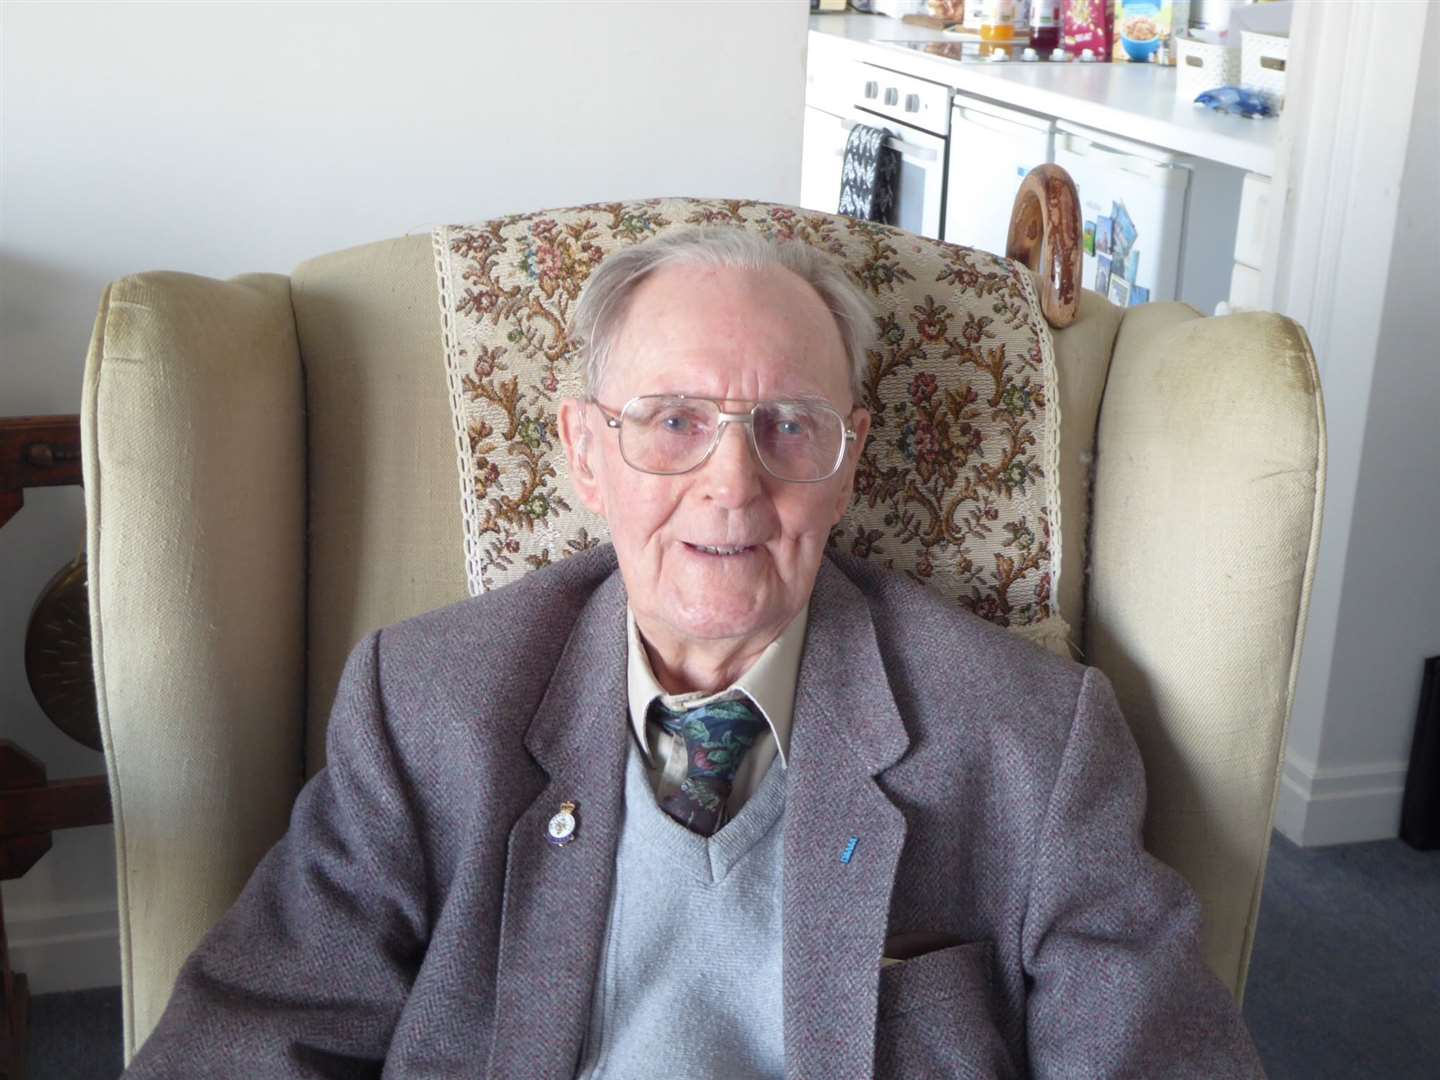 Centenarian Ken Woods ran the Christian Bookshop in Deal with wife Elsie